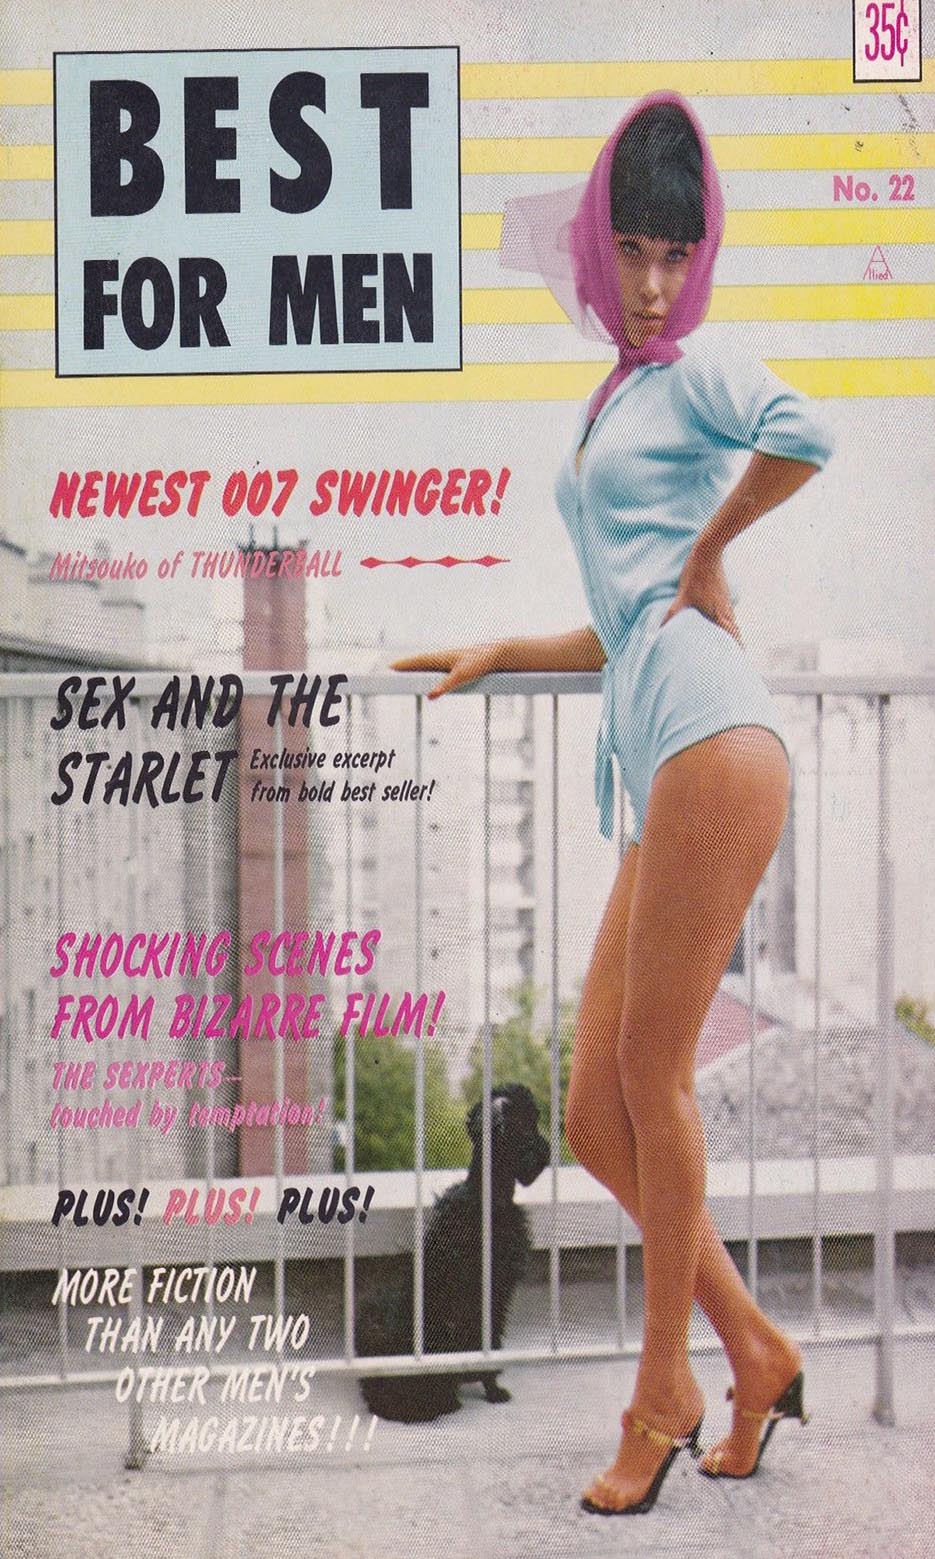 Best for Men August 1965 magazine back issue Best for Men magizine back copy 